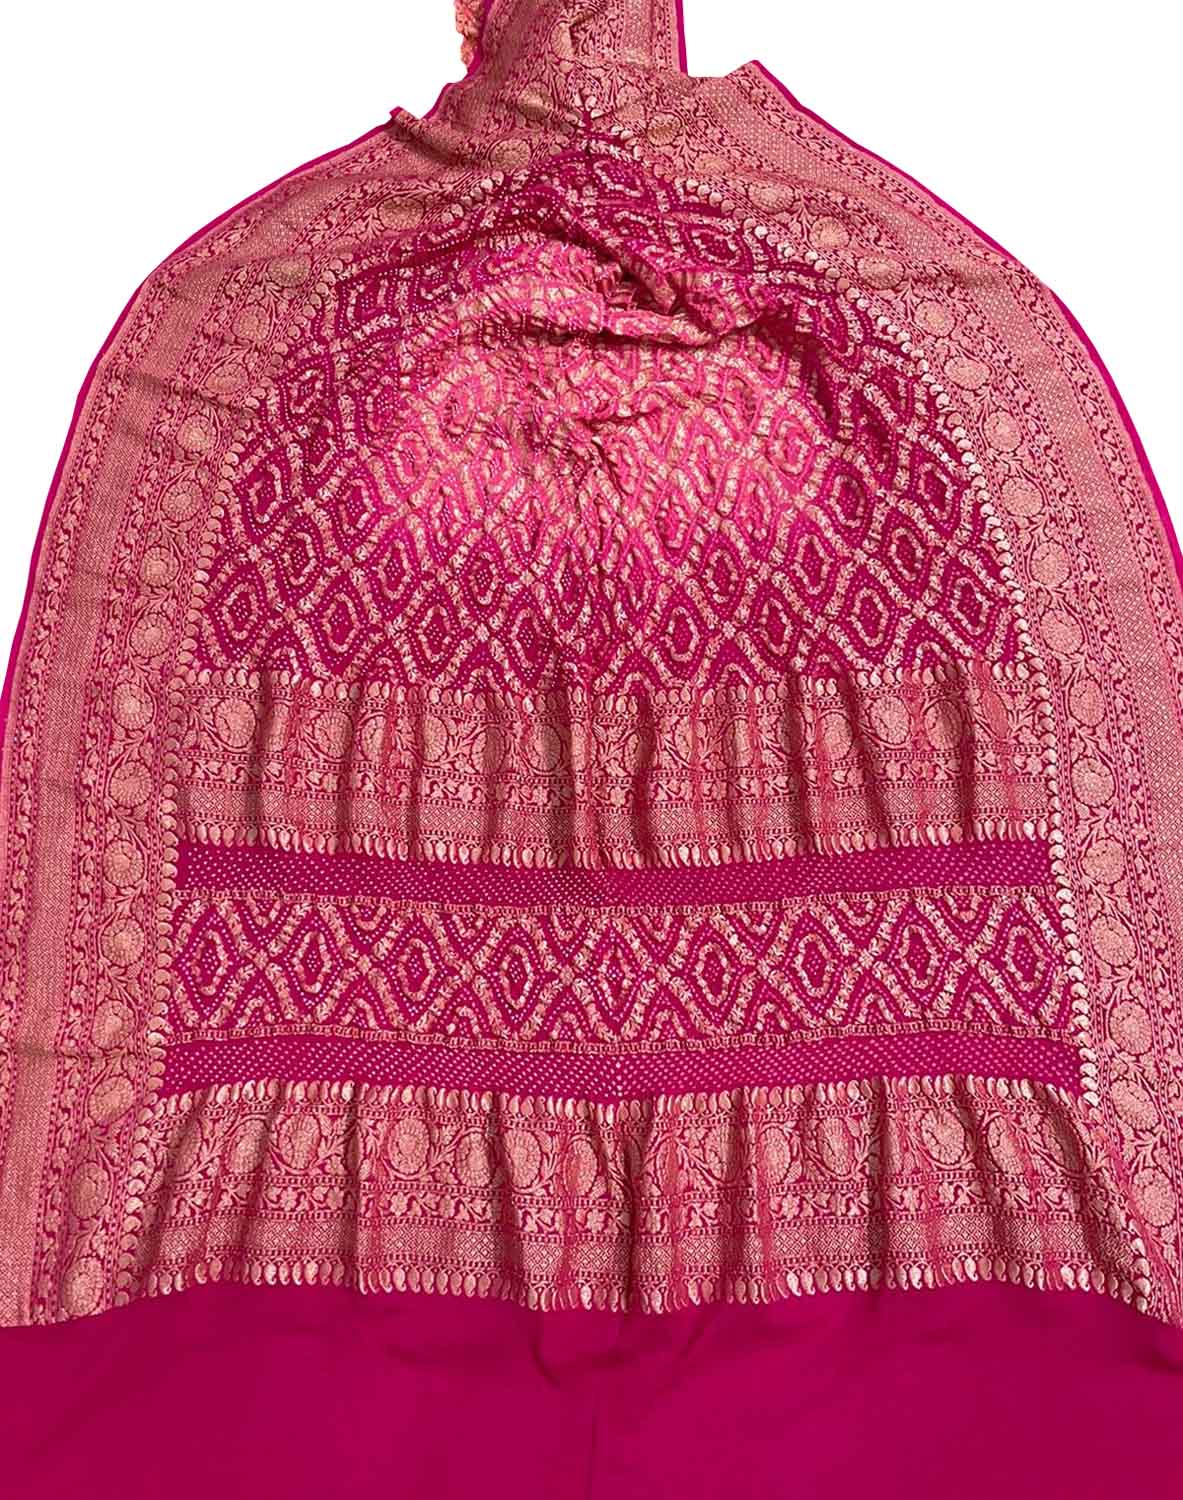 Pink Banarasi Bandhani Pure Georgette Meenakari Dupatta: Exquisite Elegance in Traditional Artistry - Luxurion World